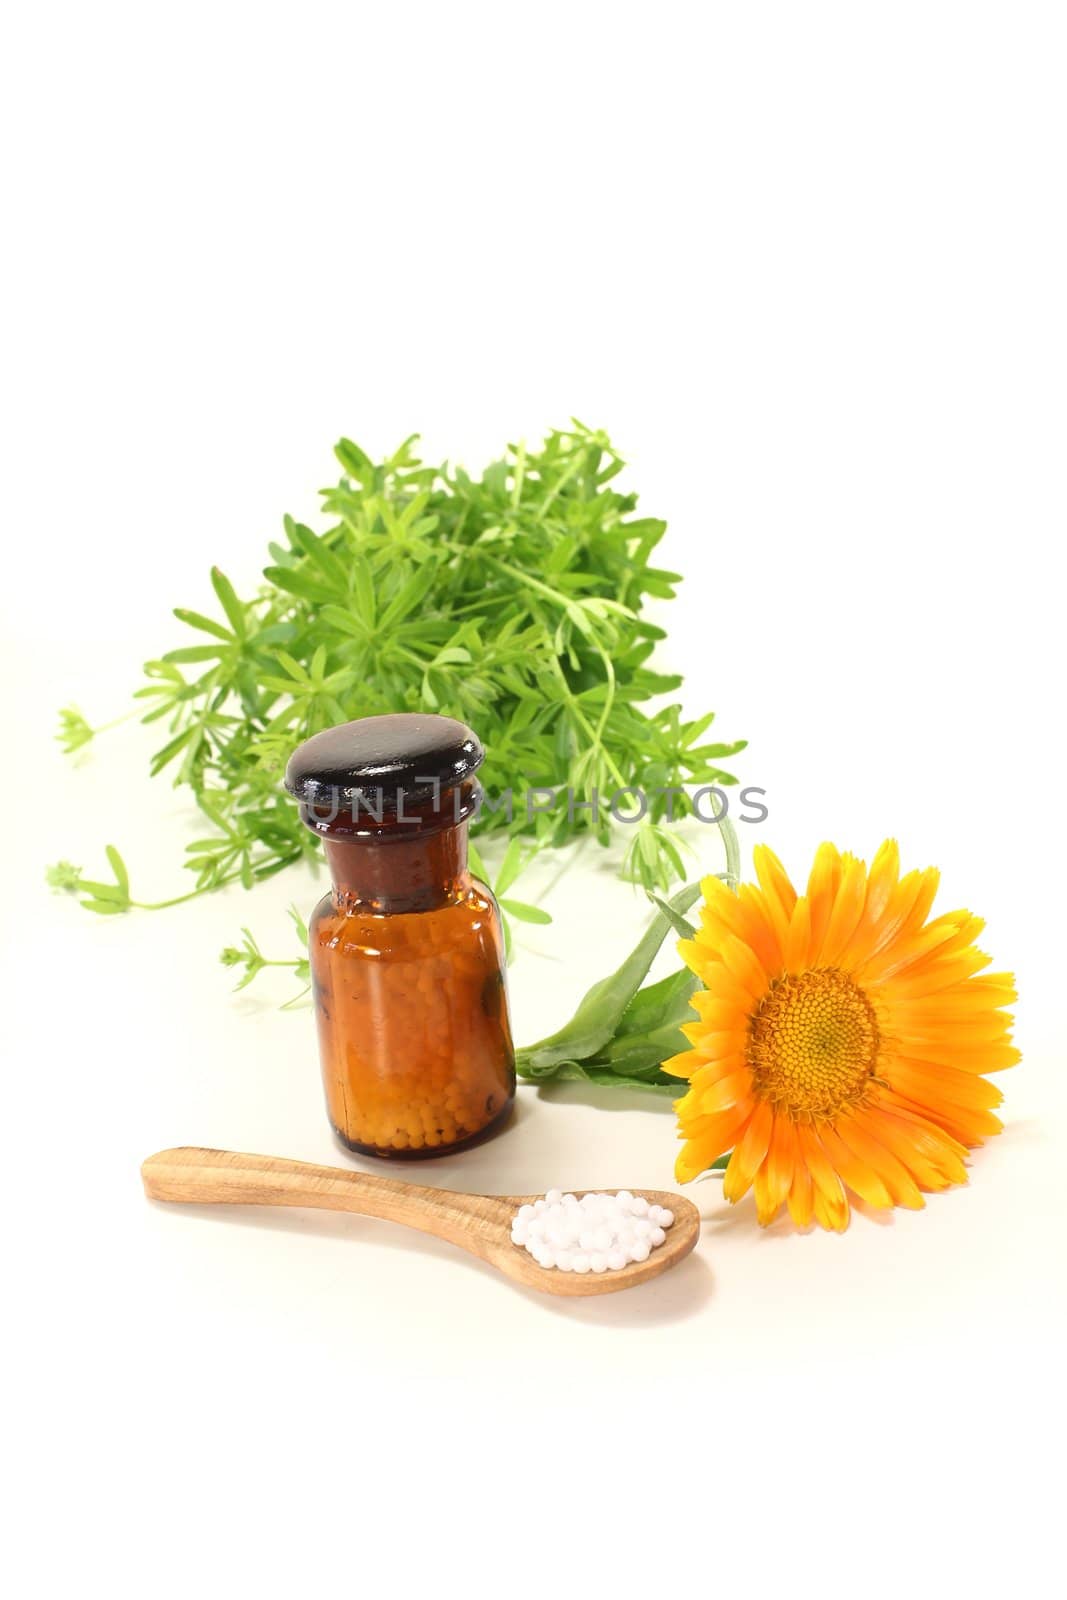 Homeopathy globules, an apothecary jar, natural herbs and marigolds